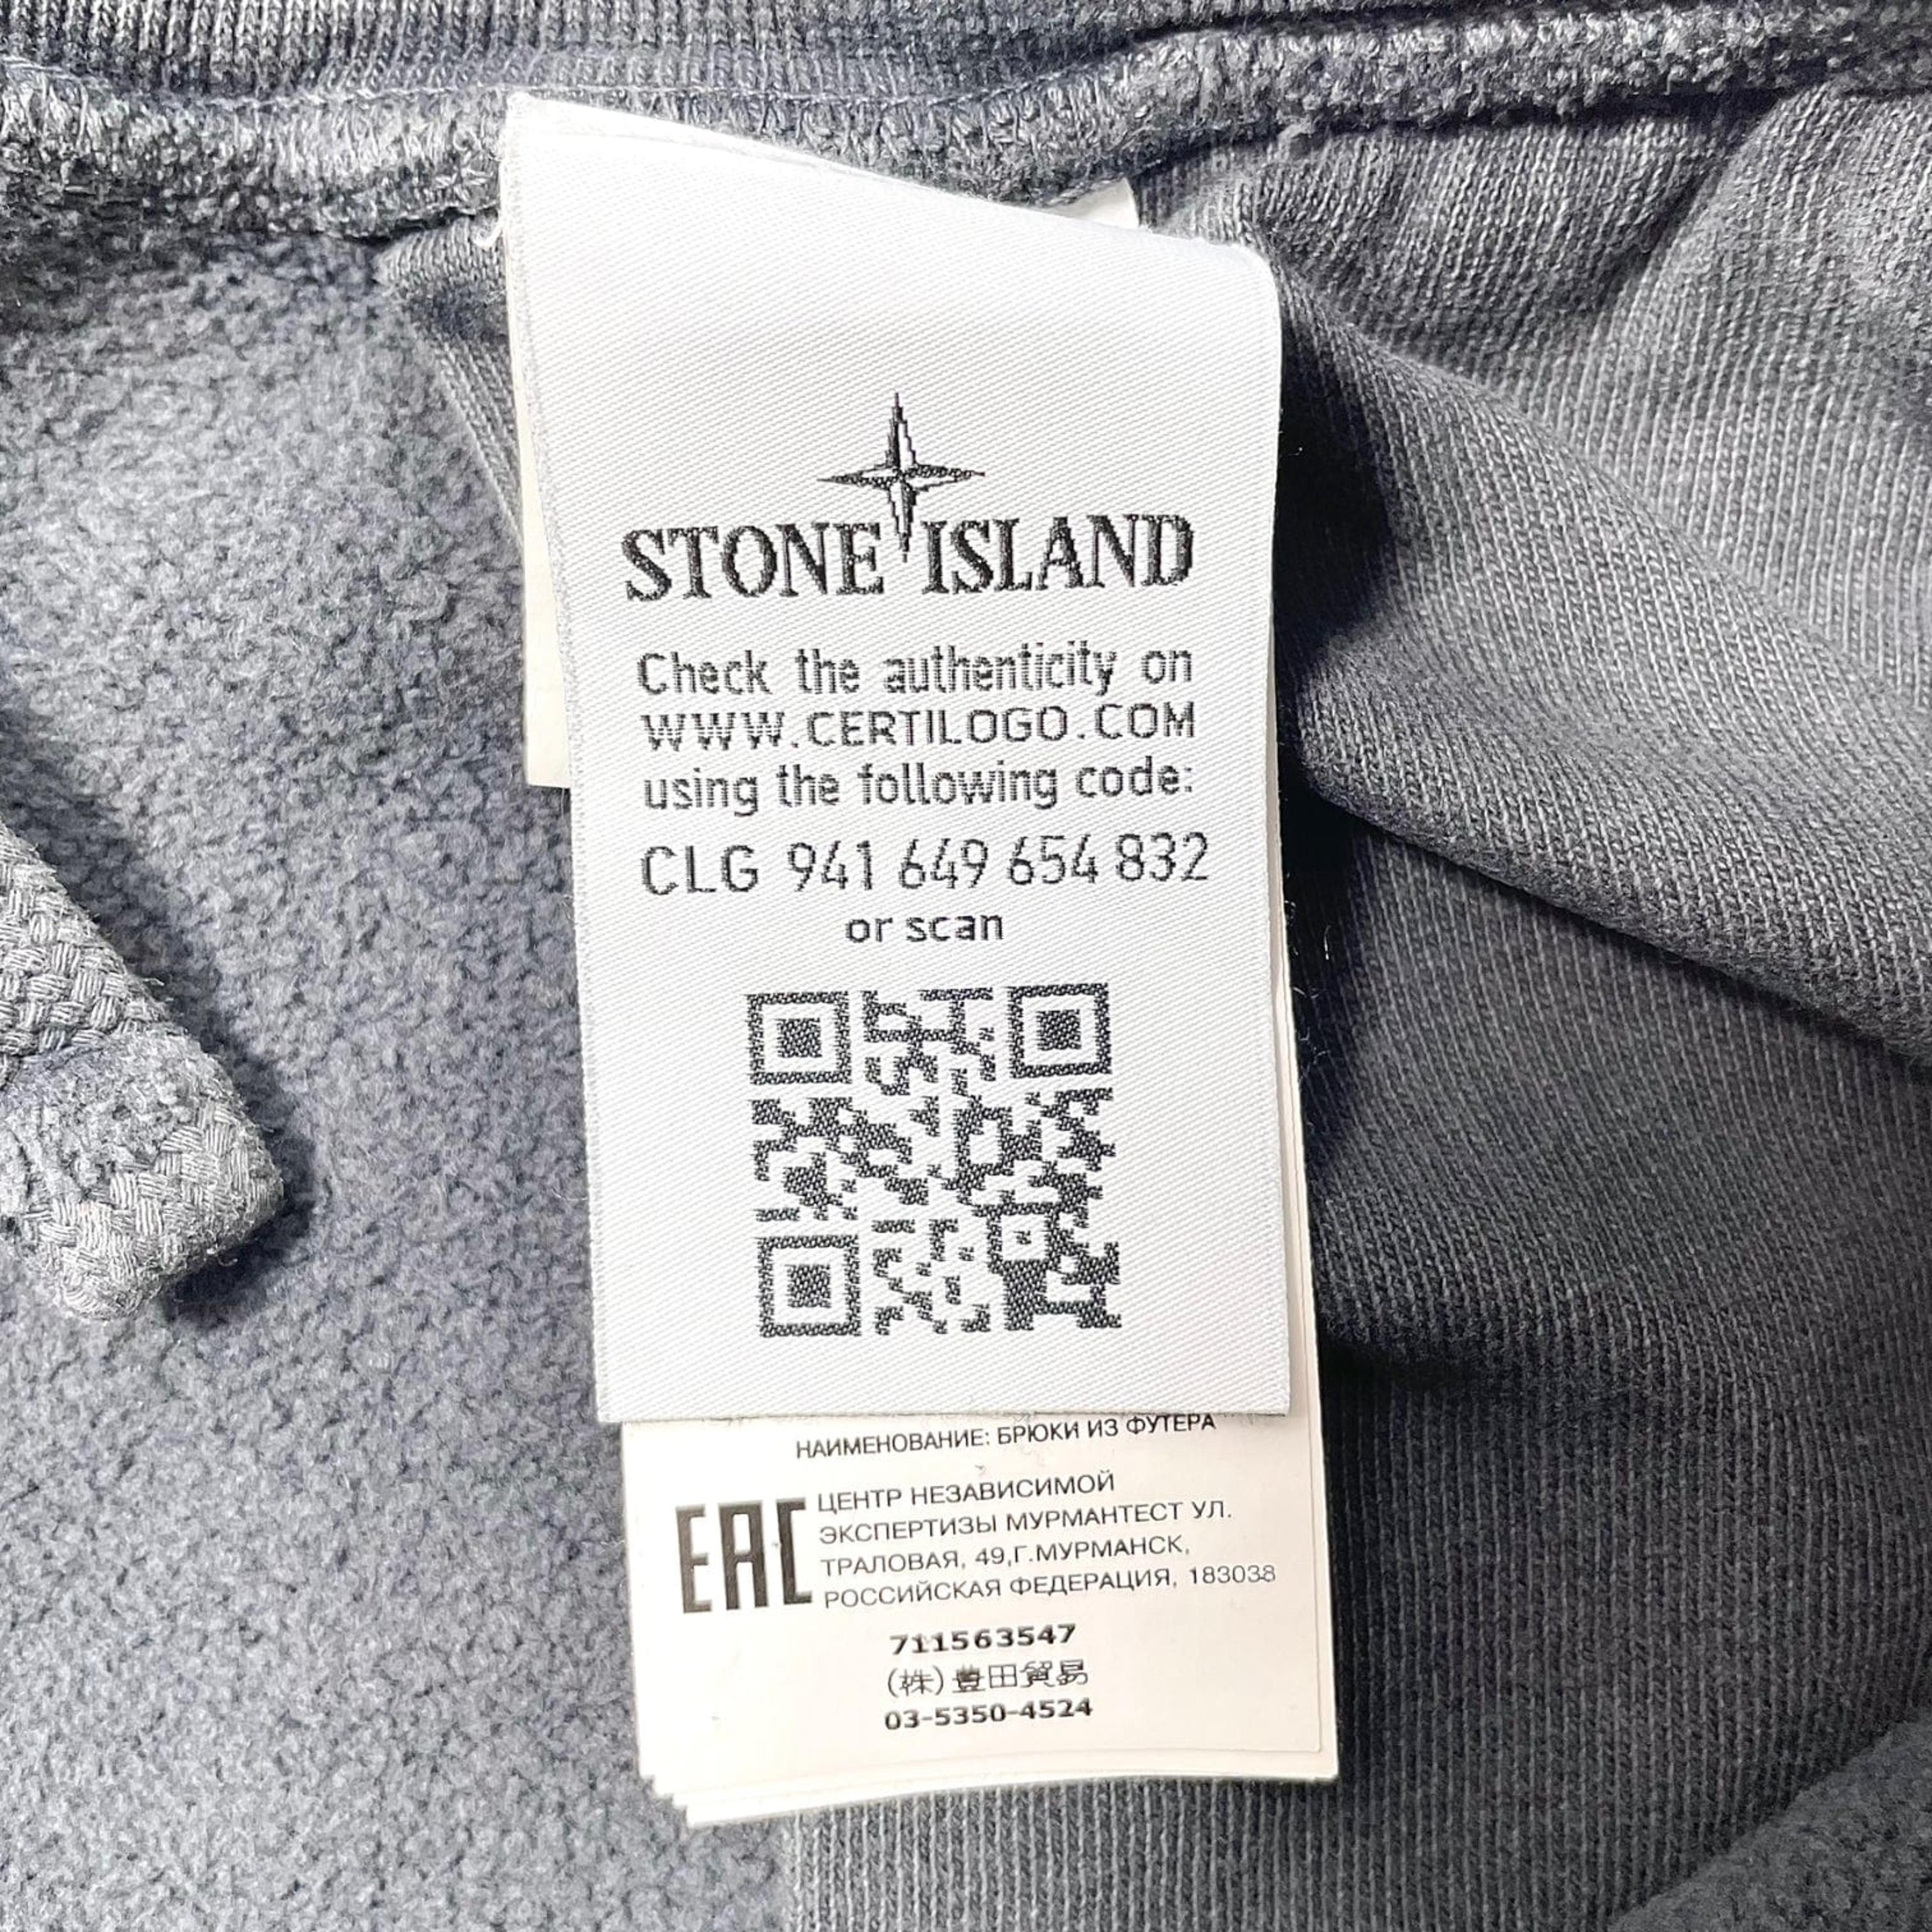 Alternate View 3 of Stone Island Compass Fleece Sweatpants Dark Grey Pre-Owned